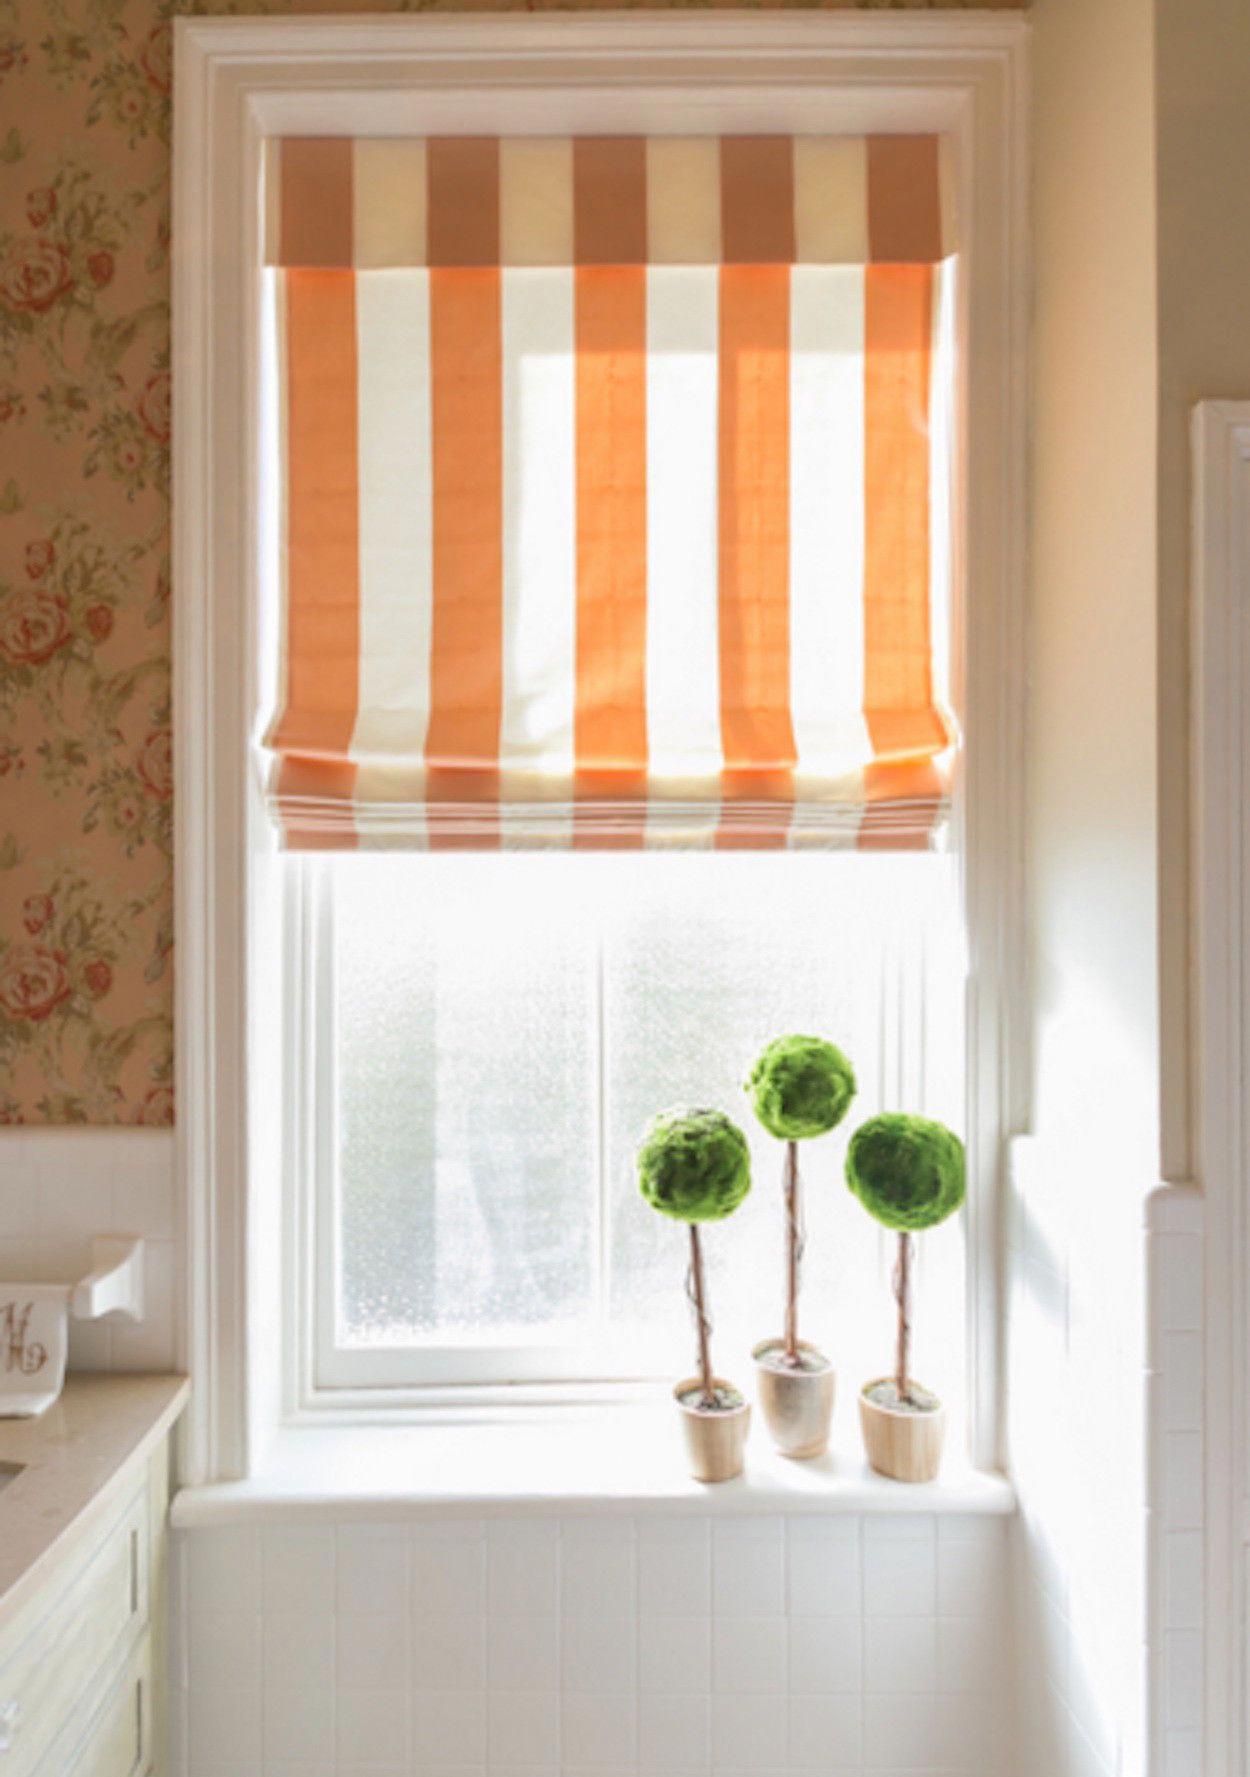 Trendy and Functional Bathroom Window
Curtain Ideas